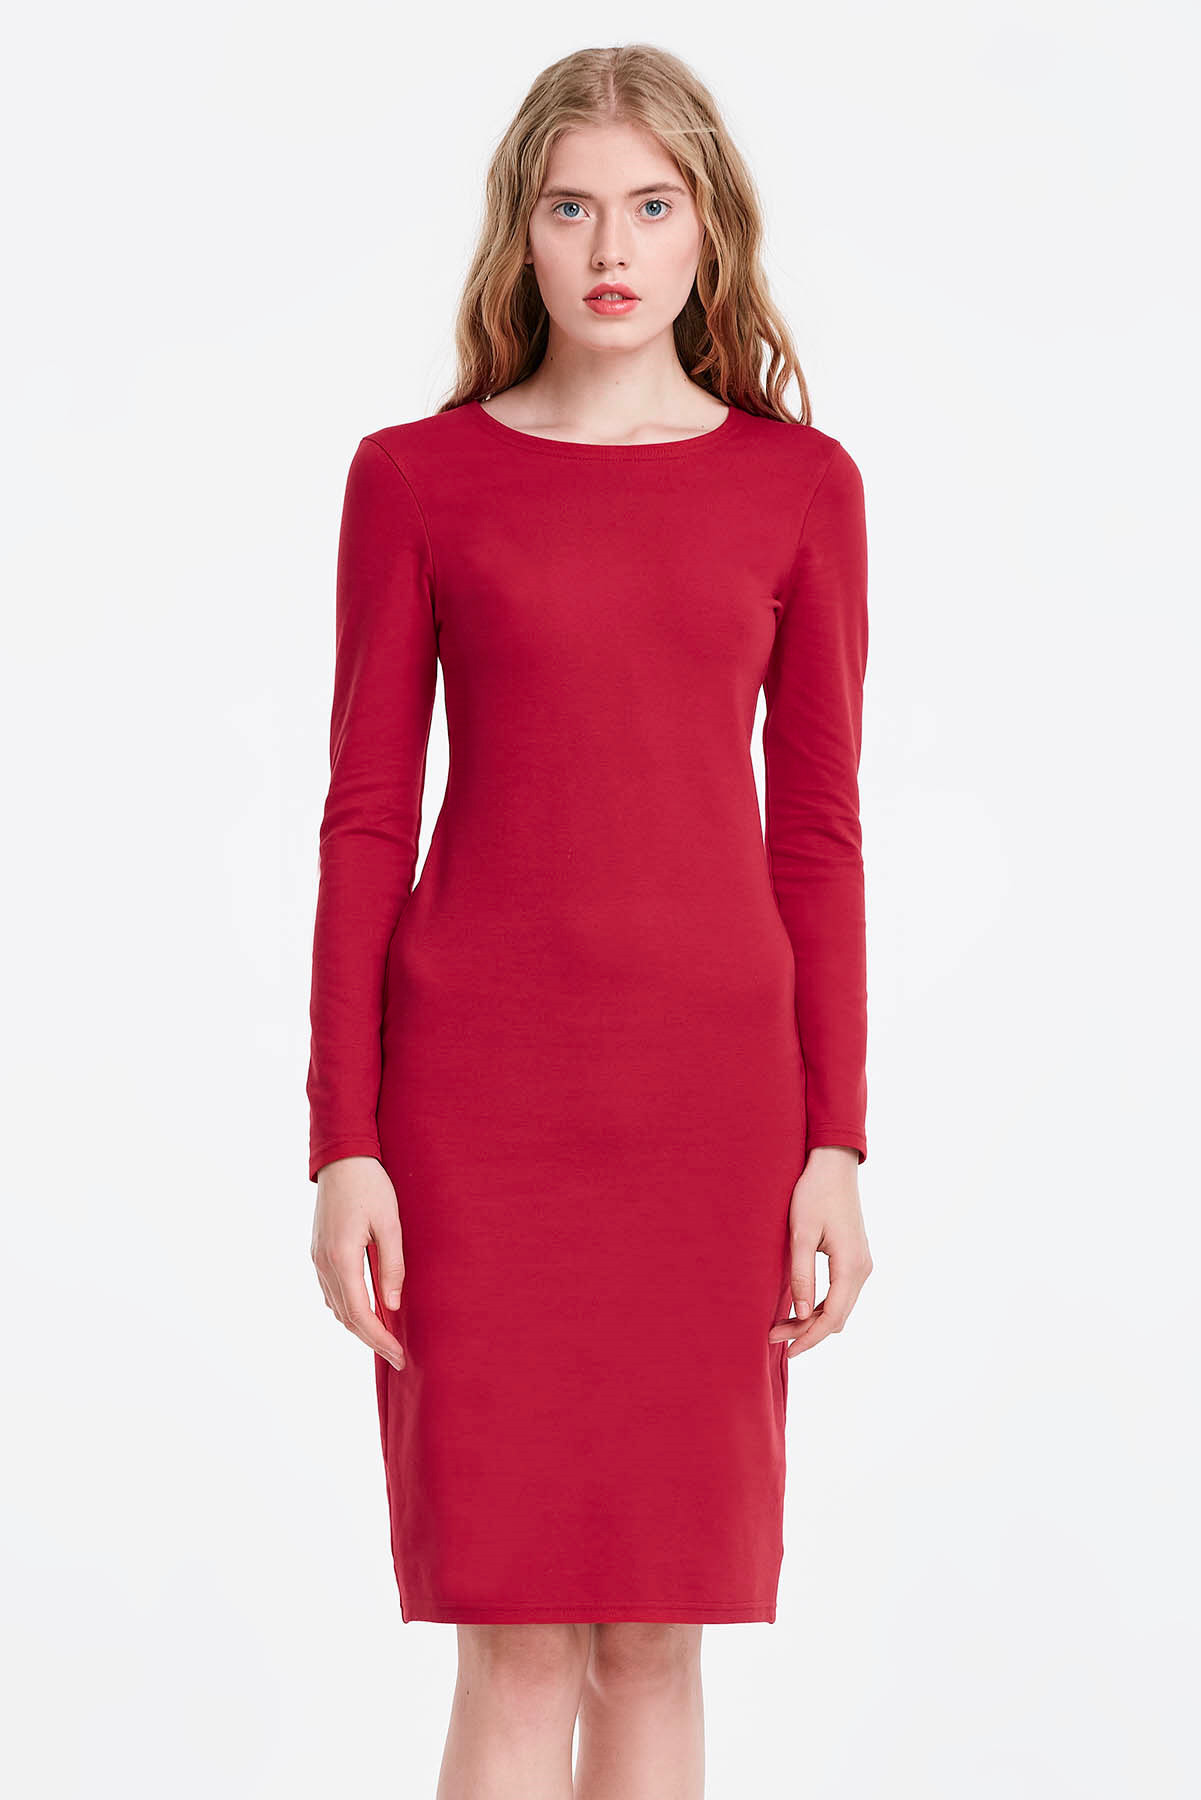 Column red dress, photo 1